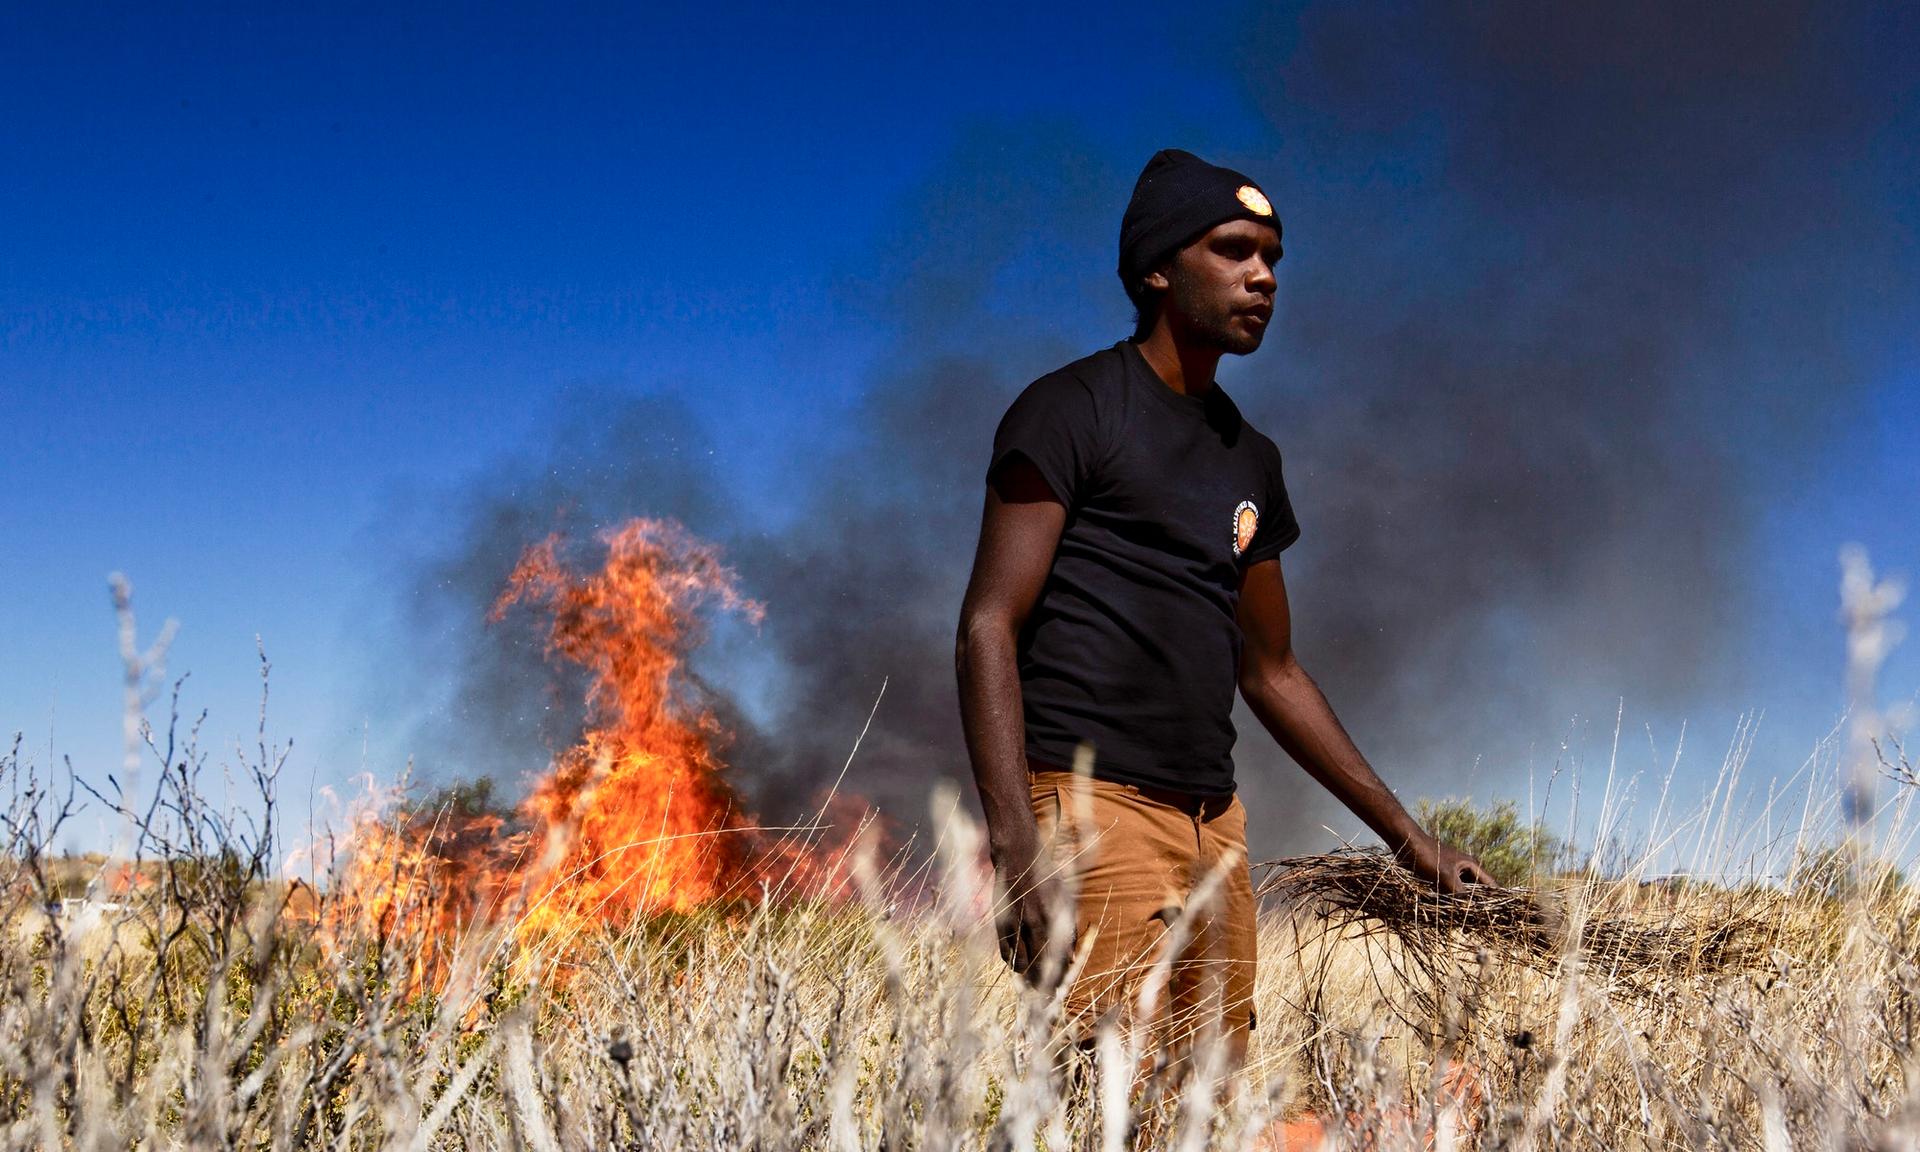 An Aboriginal fire ranger standing in front of a burning bushfire